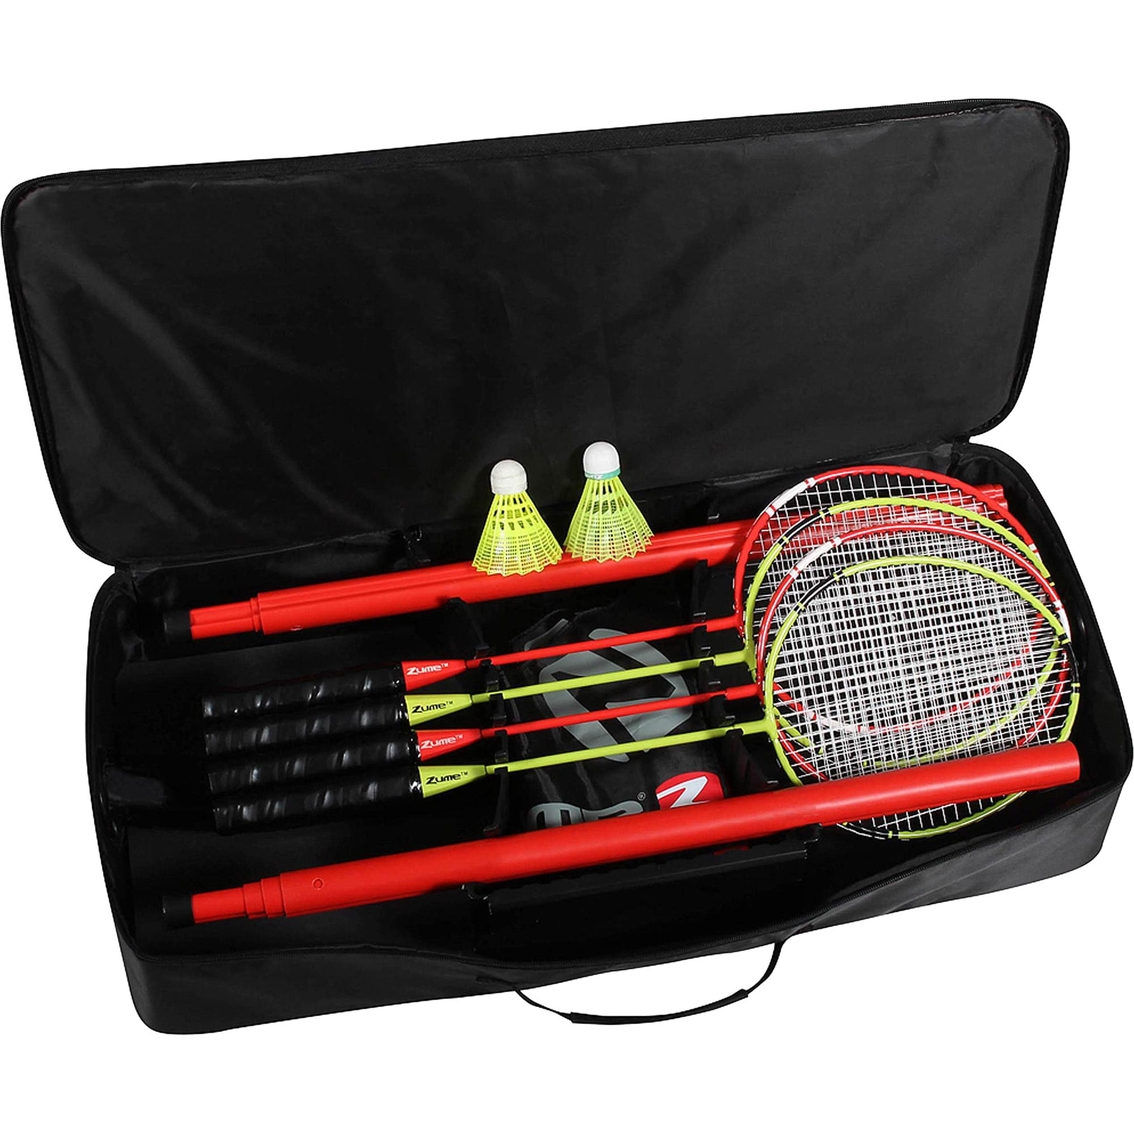 Zume 4 Player Badminton 8 Pc. Set - Image 2 of 4